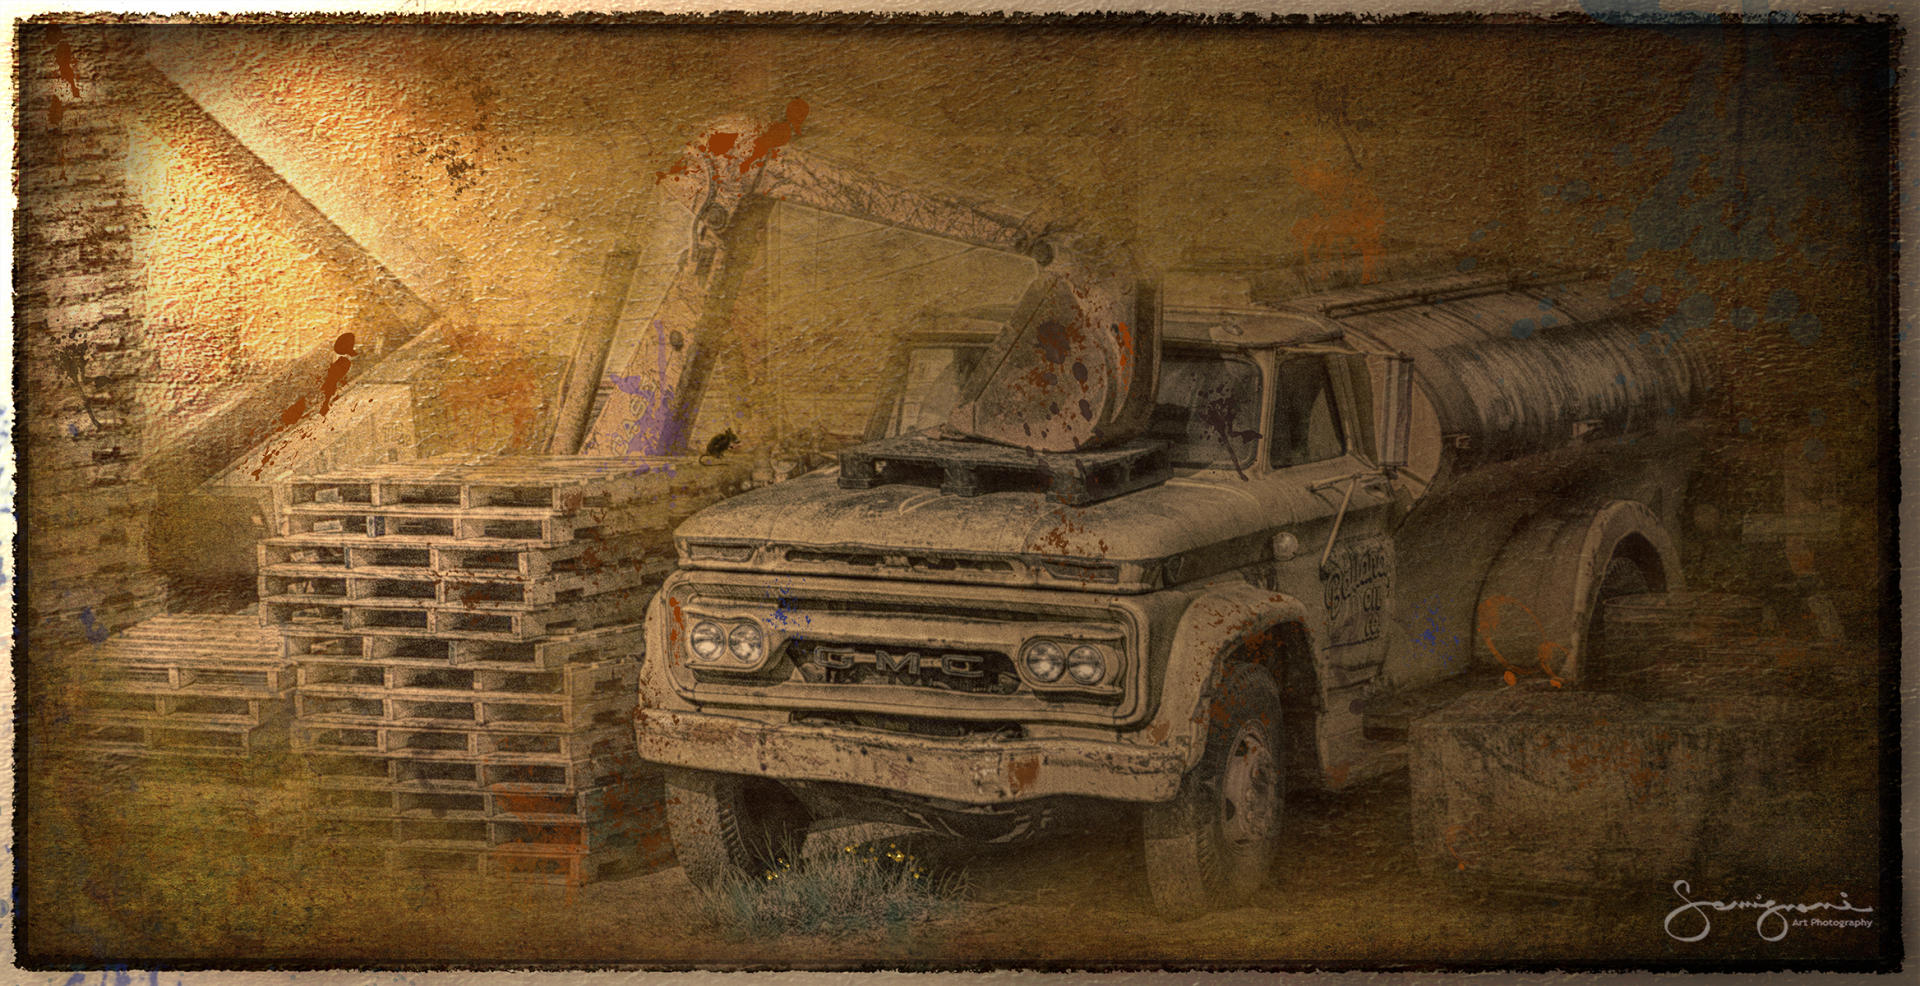 Abandoned Oil Truck-
Ballard, WA